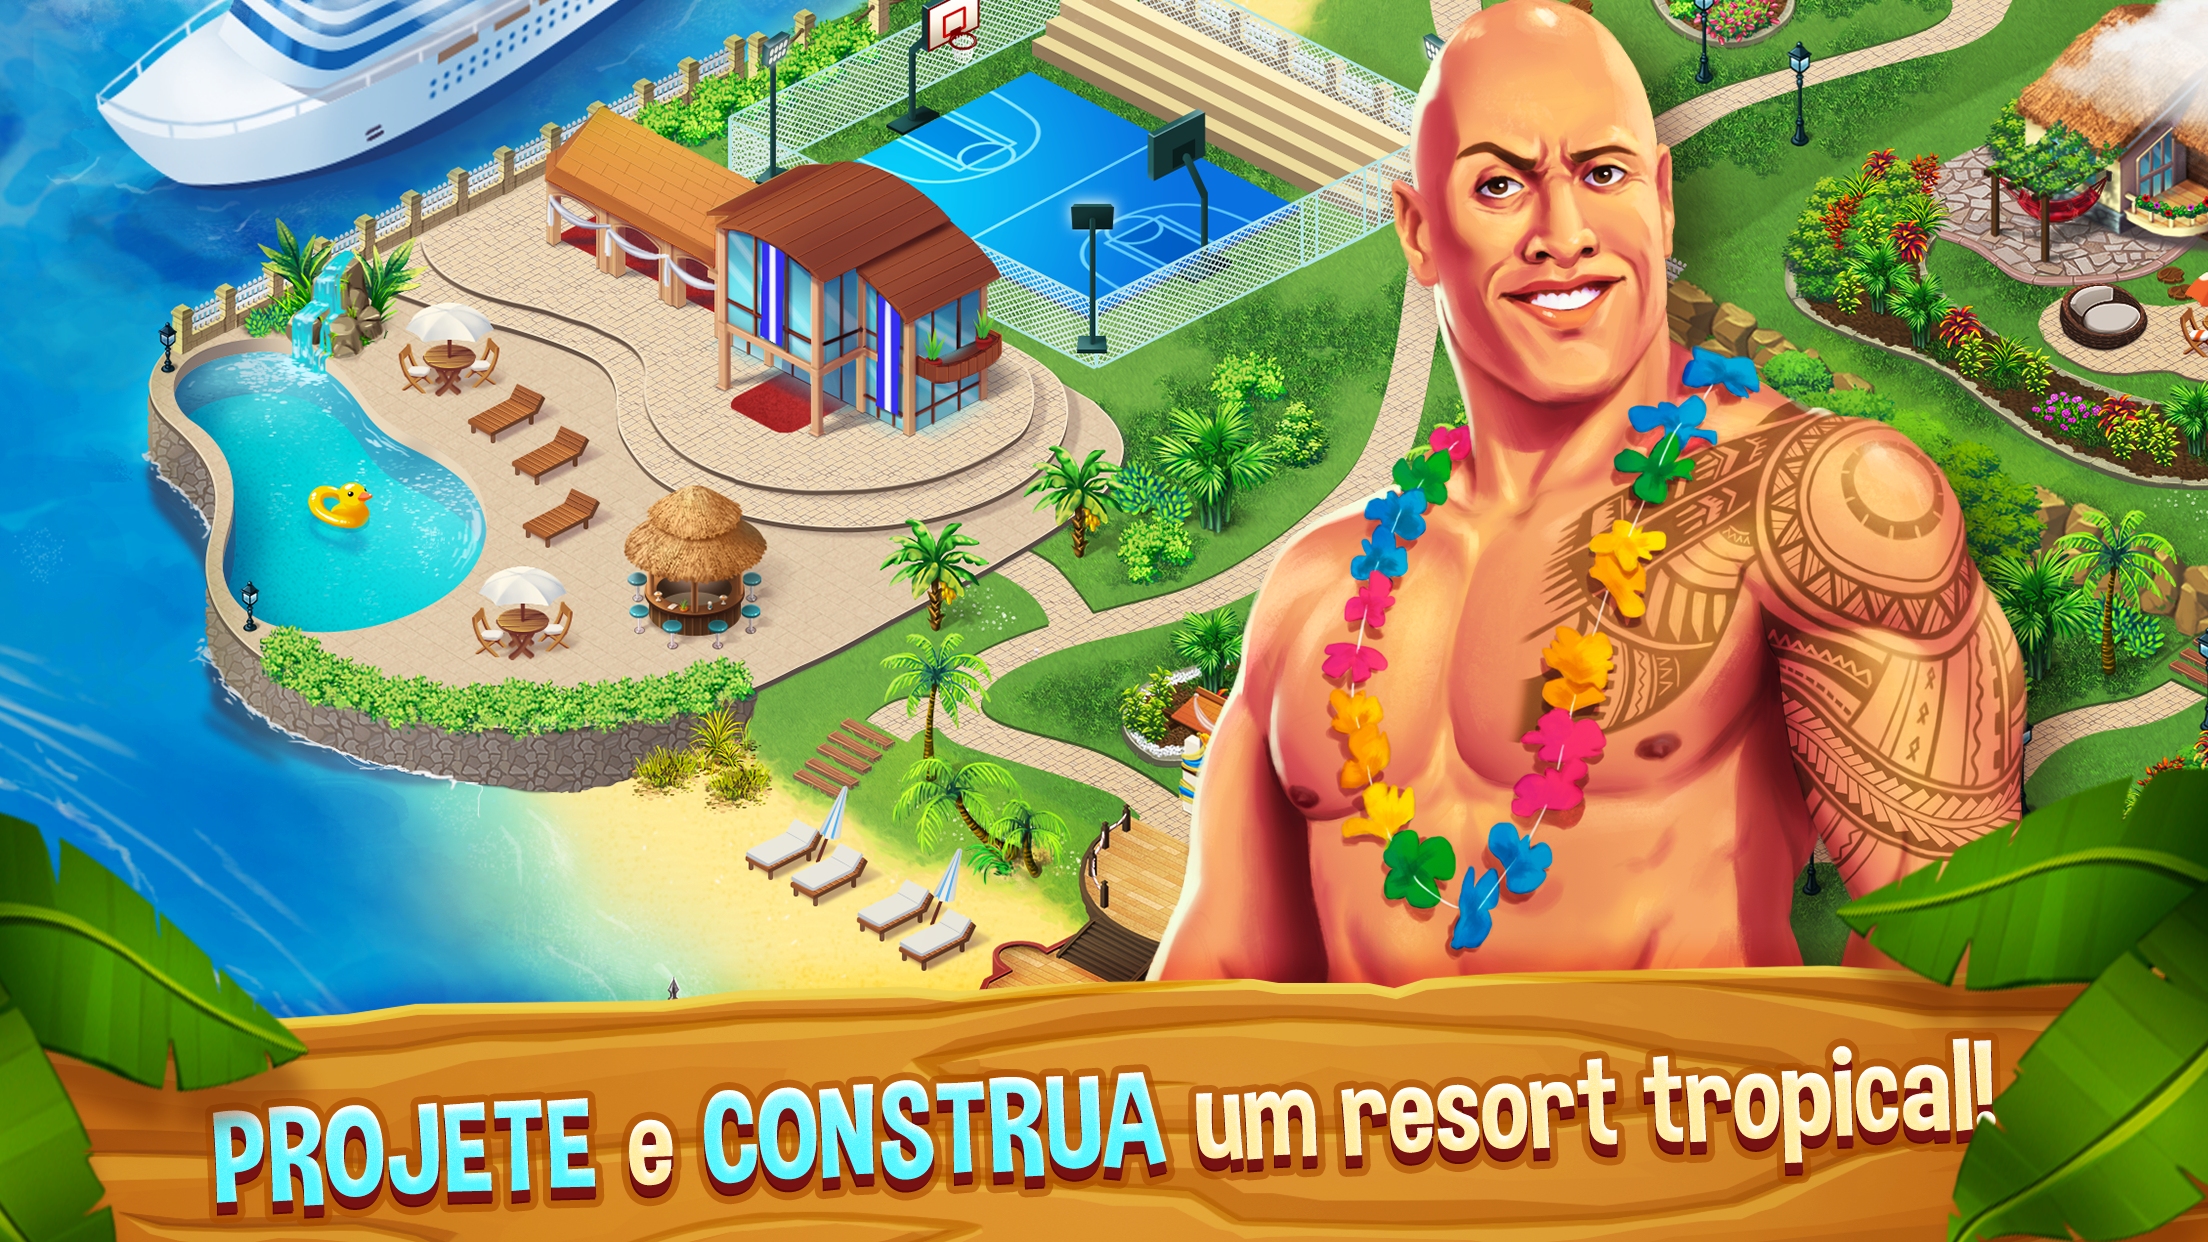 Screenshot 1 of Starside - Resort Celebridades 2.22